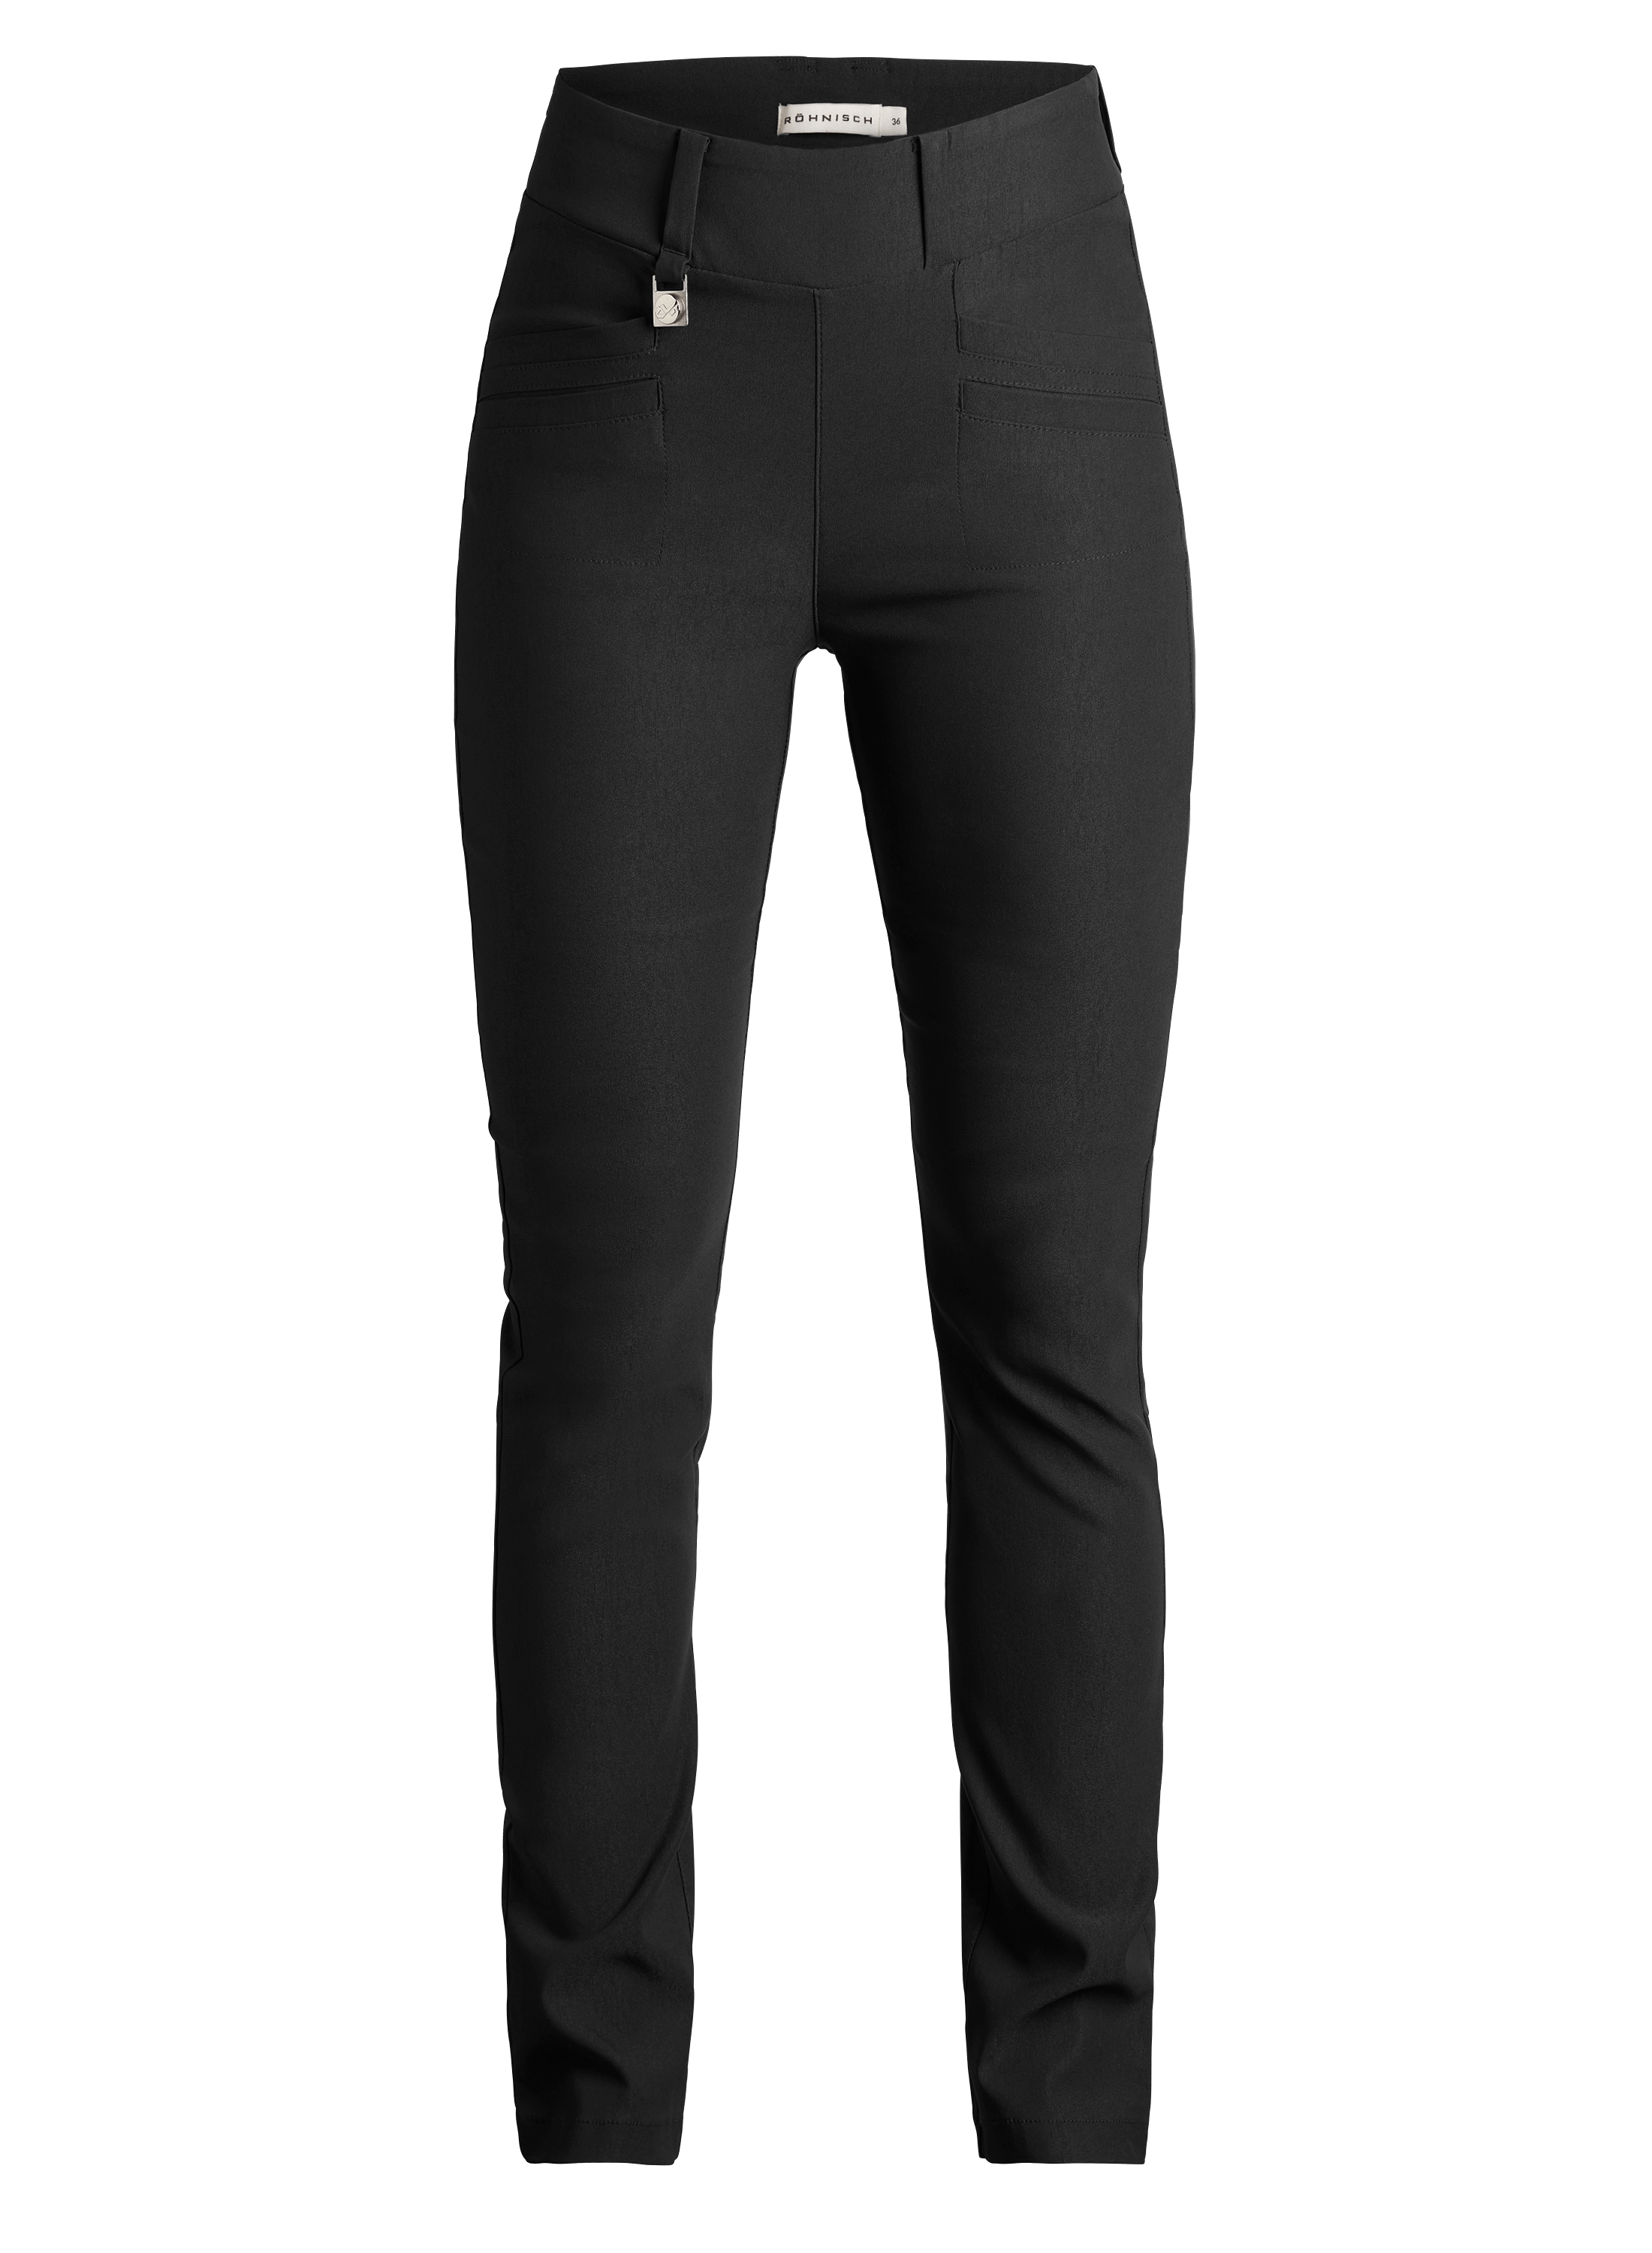 Rohnisch 110885 Embrace Pants 32 Black Front Sight